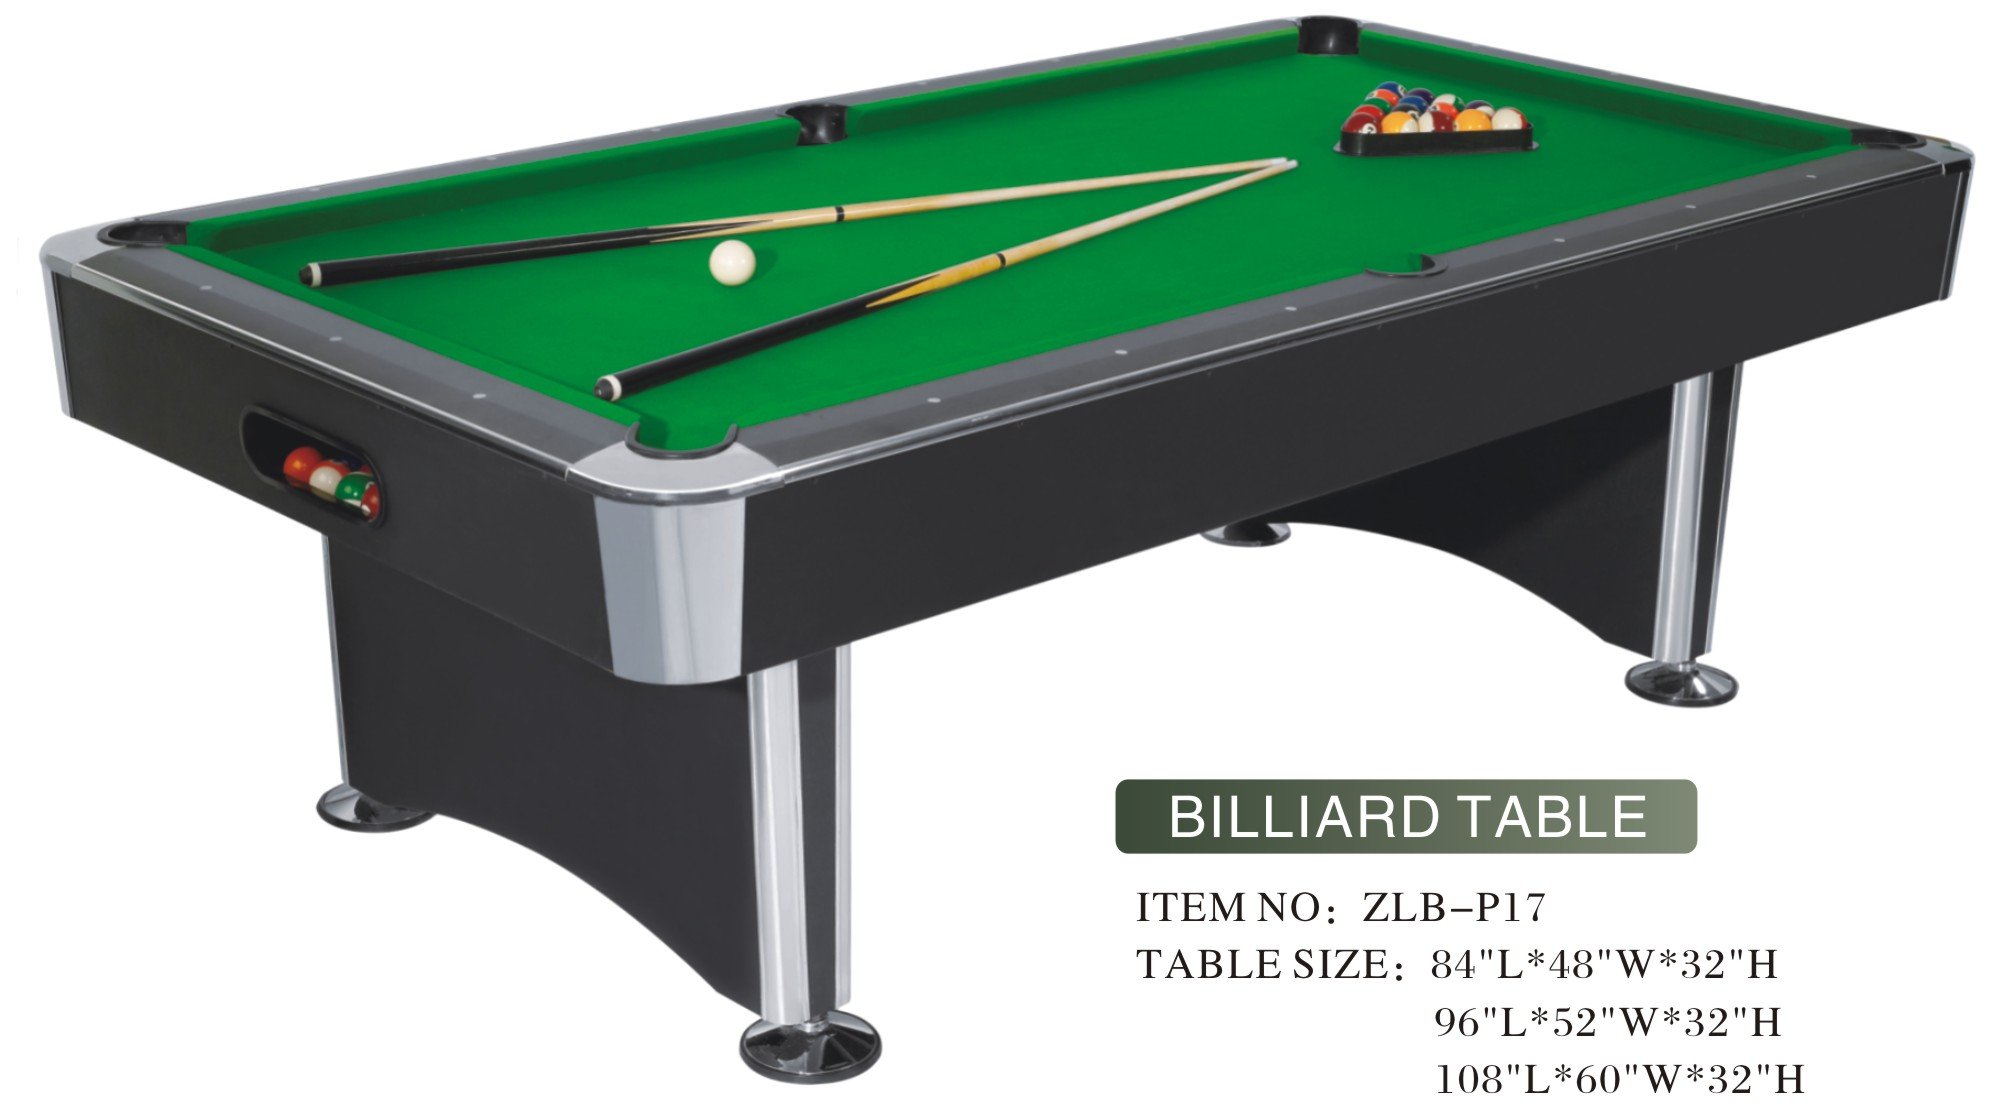  Billiard Table,Billiard Table Dimensions,Outdoor Billiard Table